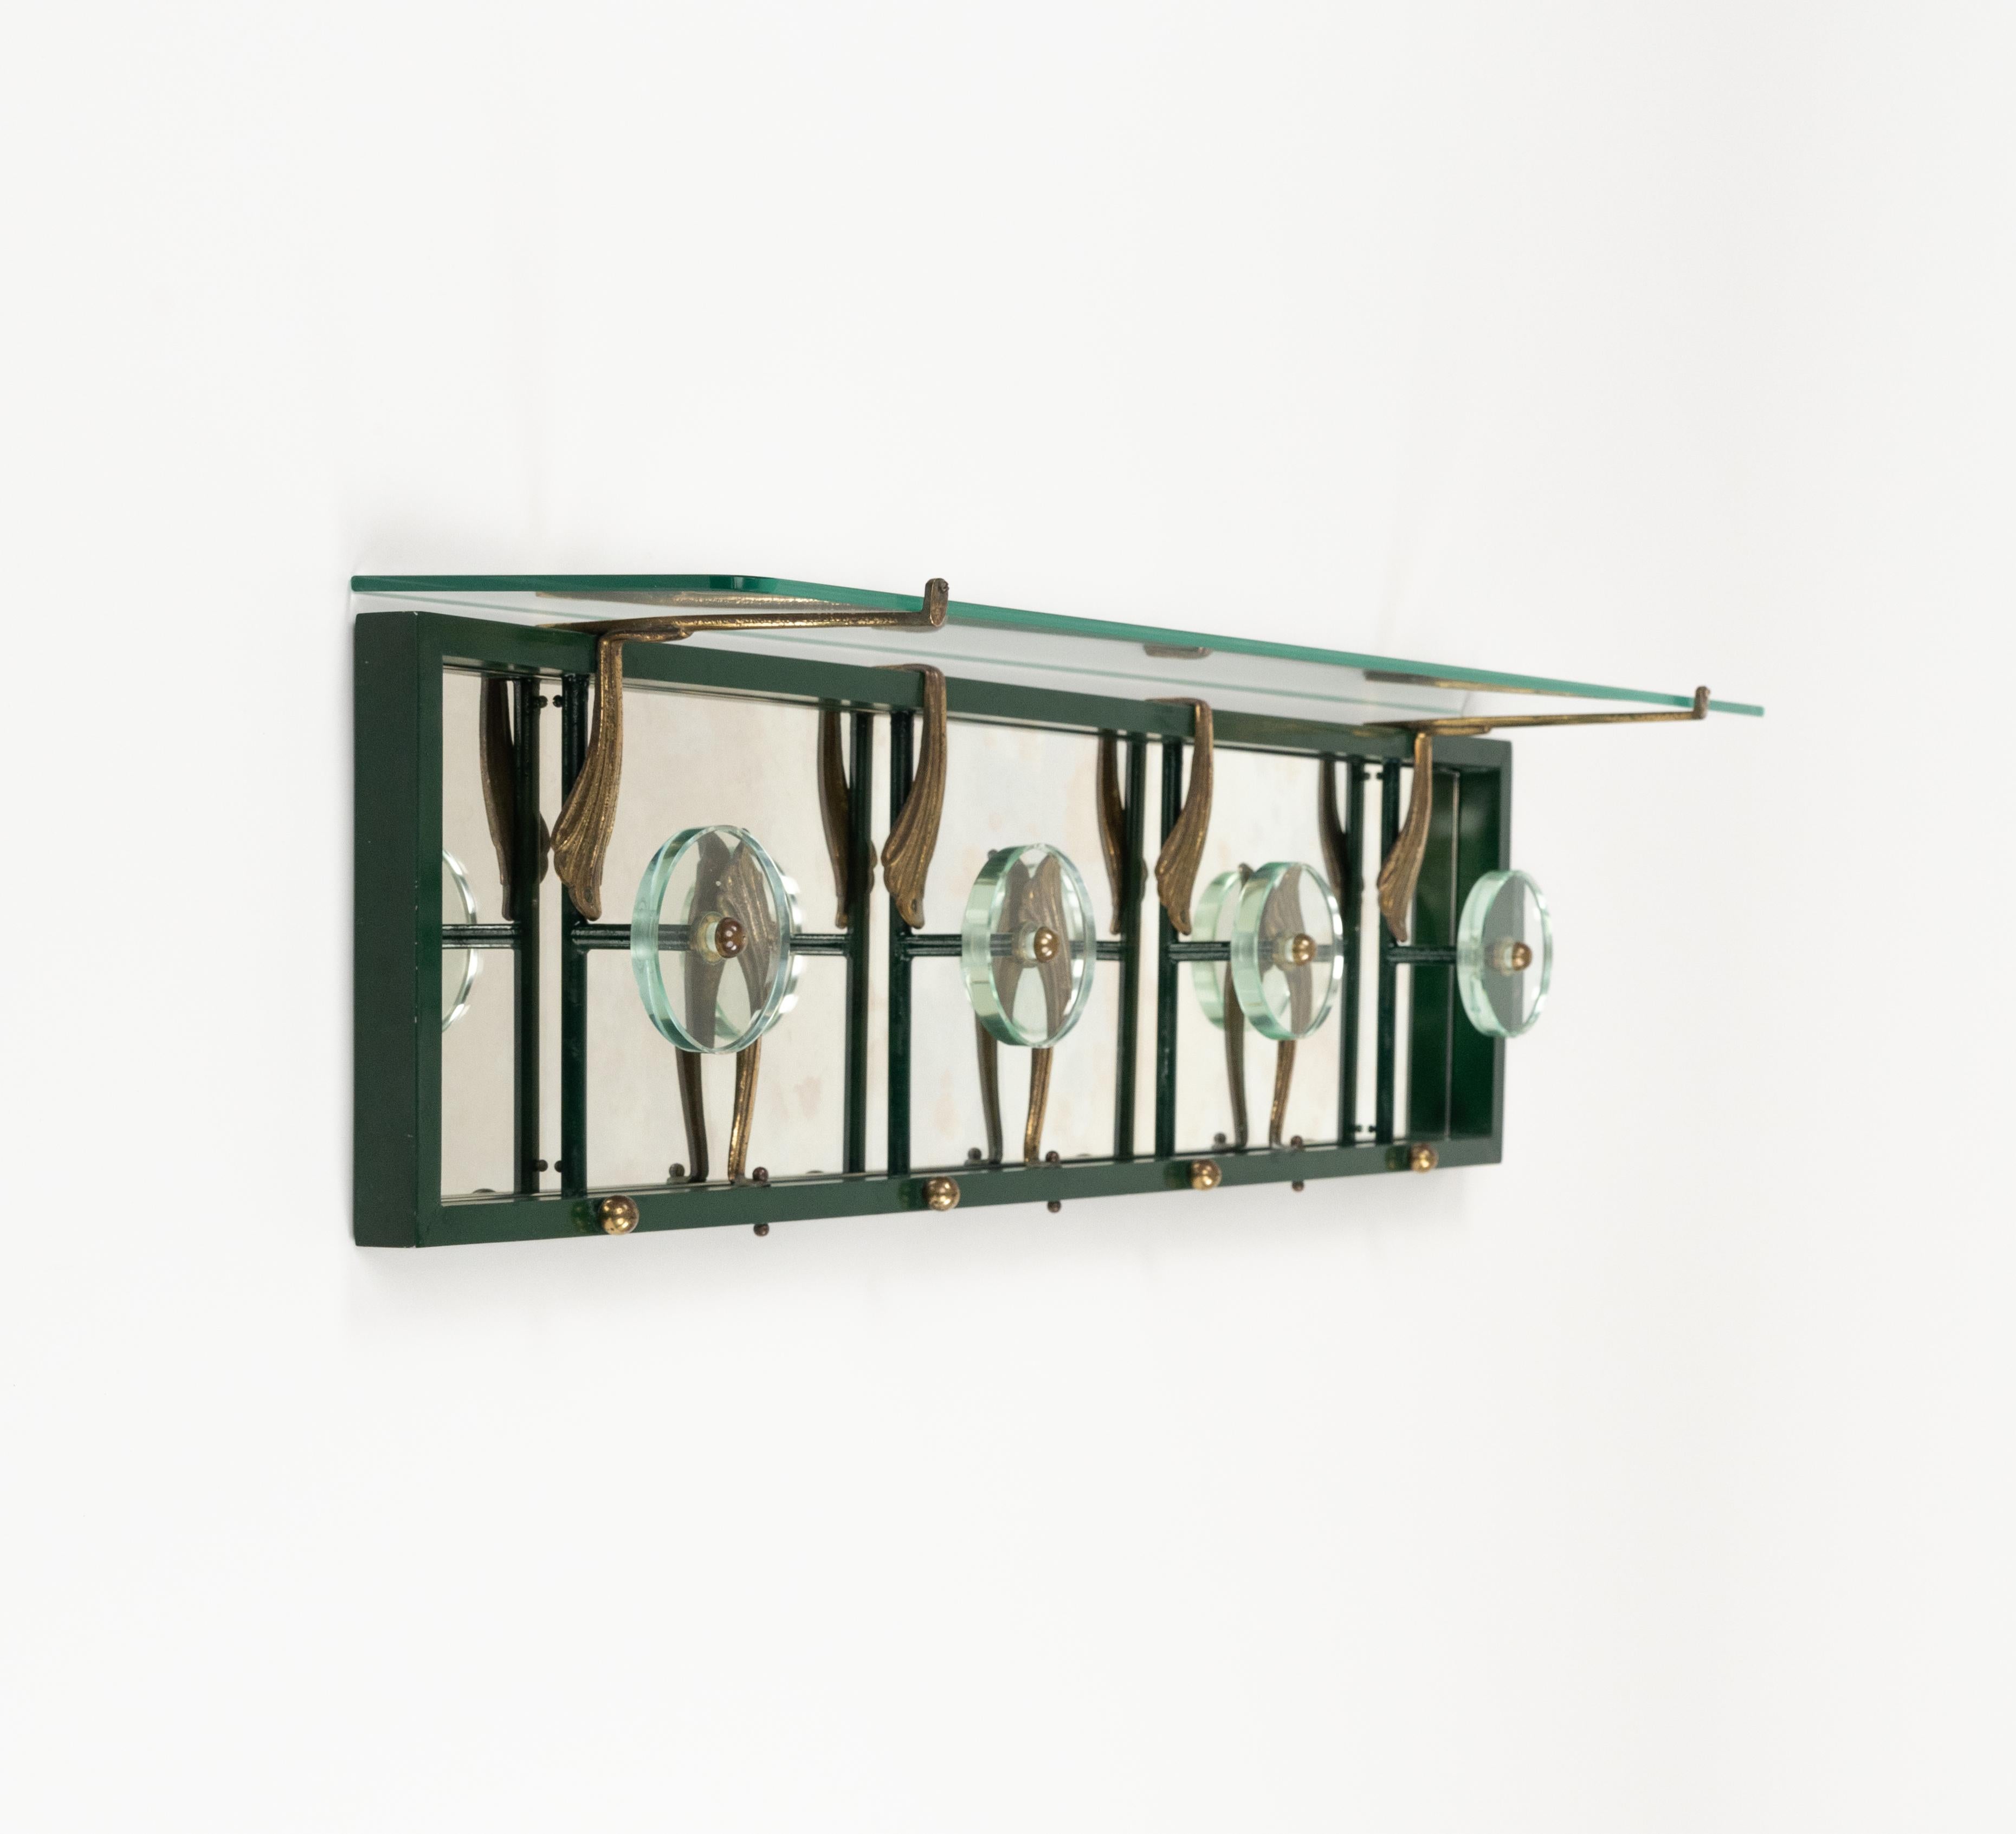 Metal Midcentury Coat Rack Shelf in Mirror, Brass & Glass by Cristal Art, Italy, 1950s For Sale